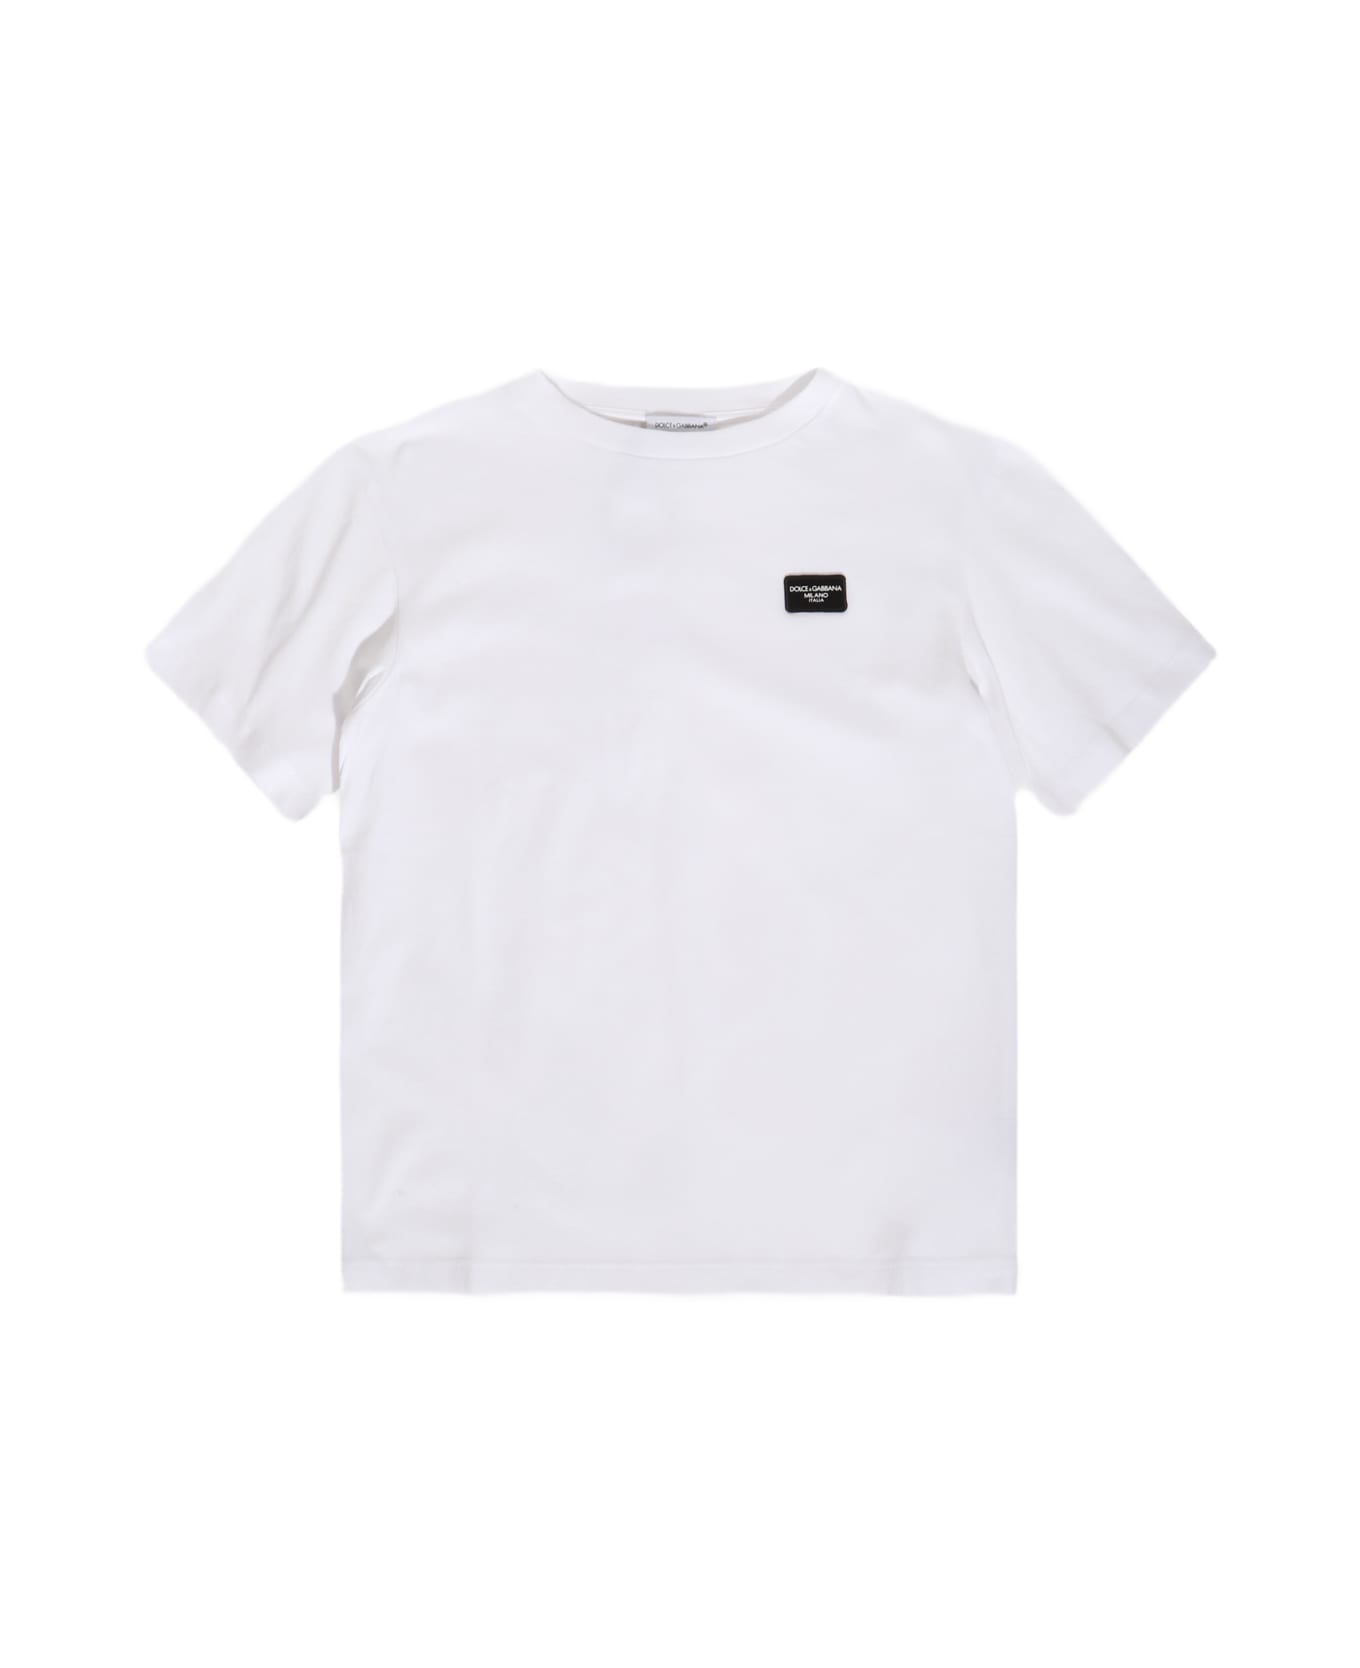 BOSS J25N50 Short Sleeve Polo White Cotton T-shirt - White